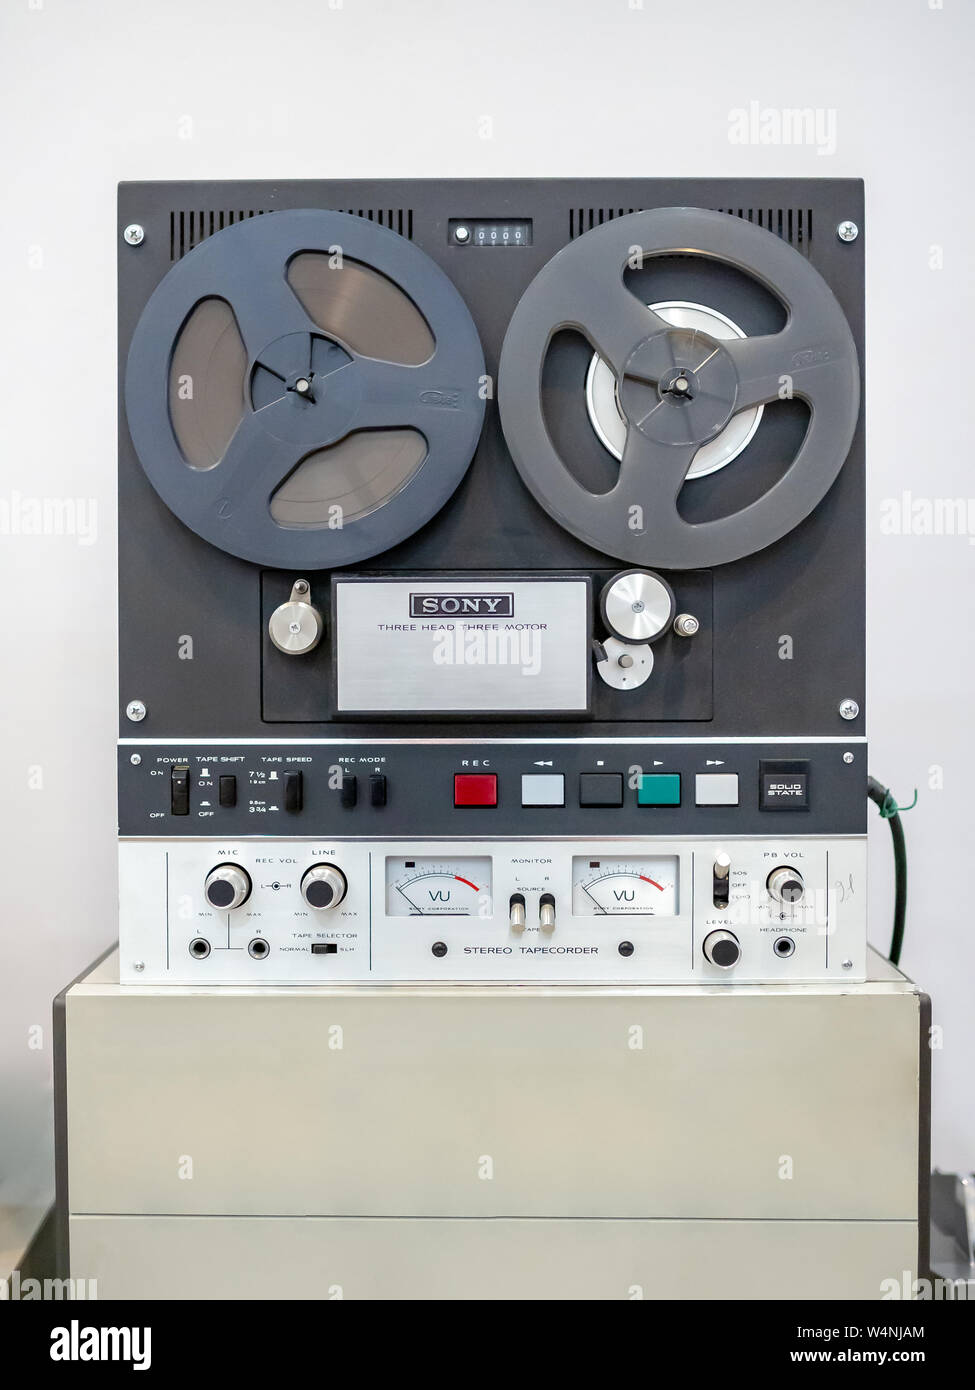 https://c8.alamy.com/comp/W4NJAM/kiev-ukraine-july-23-2019-vintage-sony-professional-reel-to-reel-tape-recorder-W4NJAM.jpg